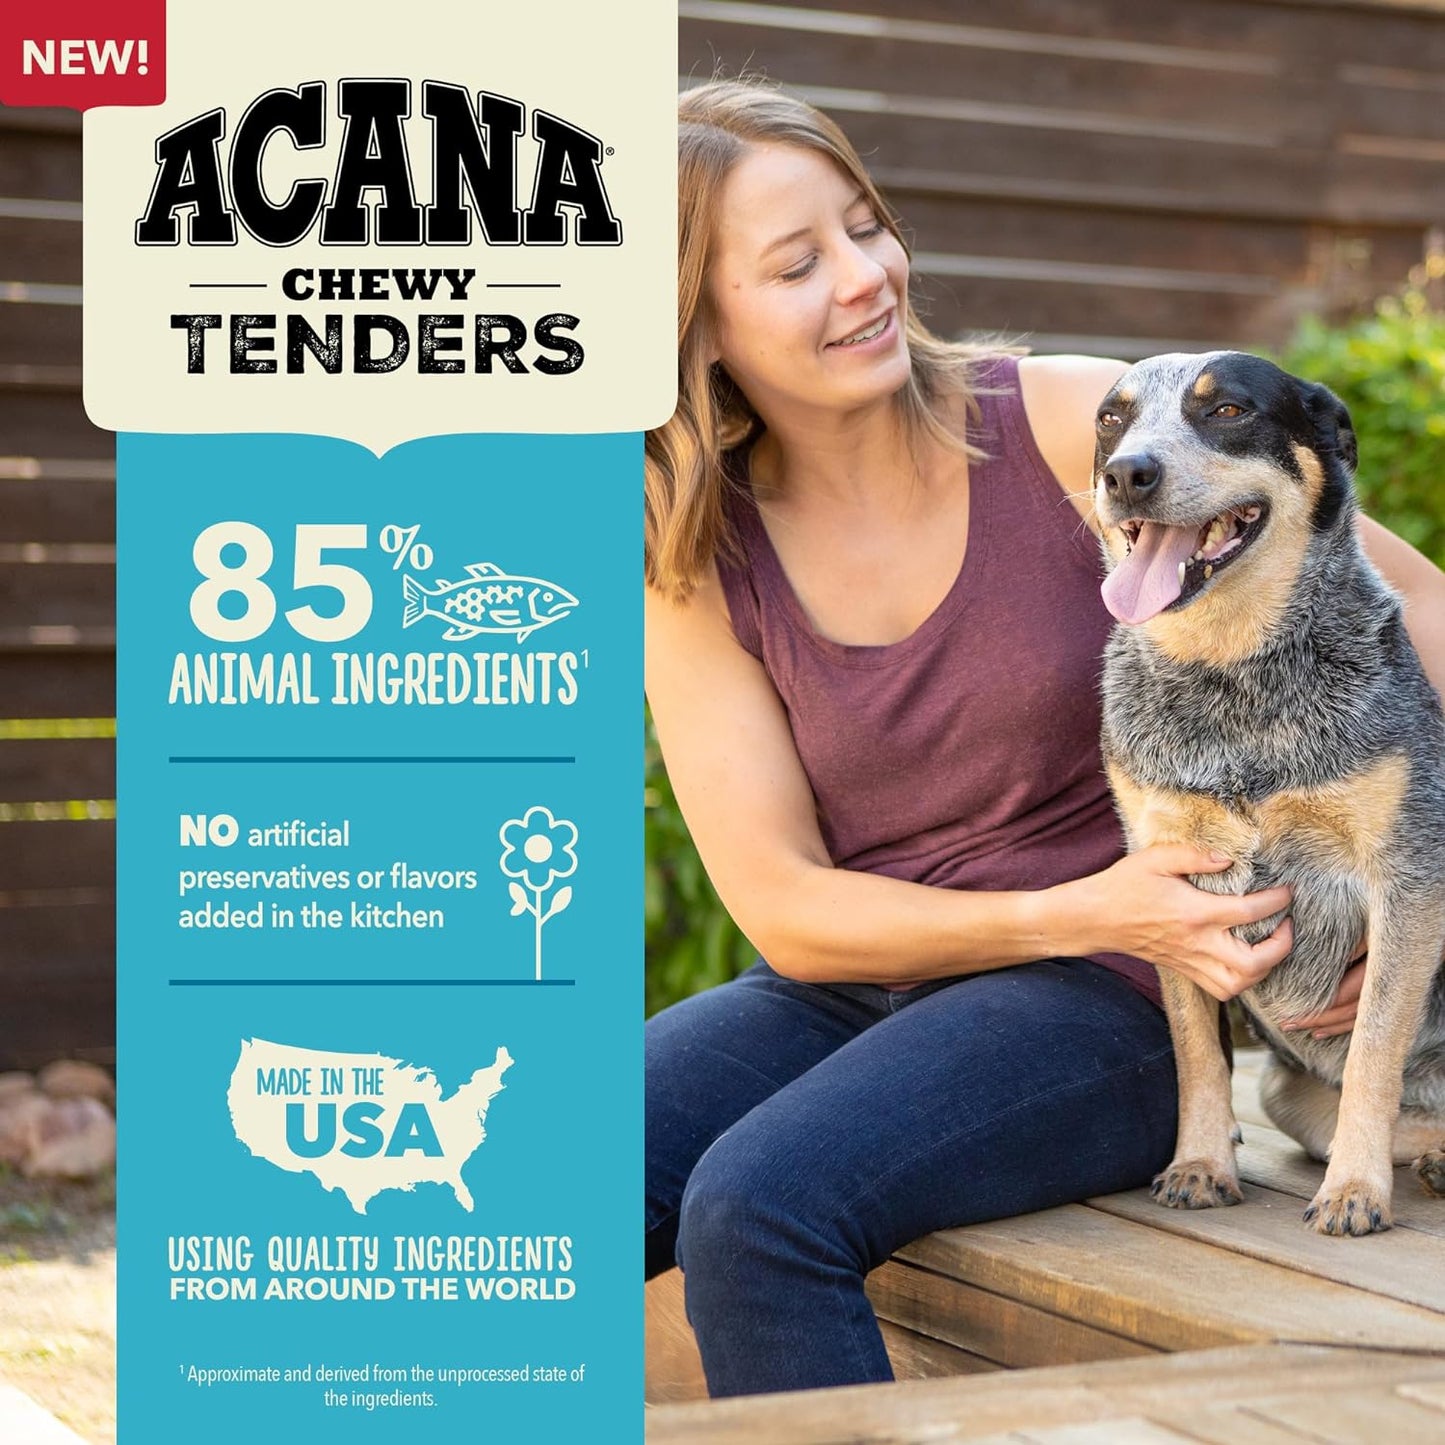 Acana Chewy Tenders Skin, Coat & Digestive Support Salmon Recipe 4-oz, Dog Treat